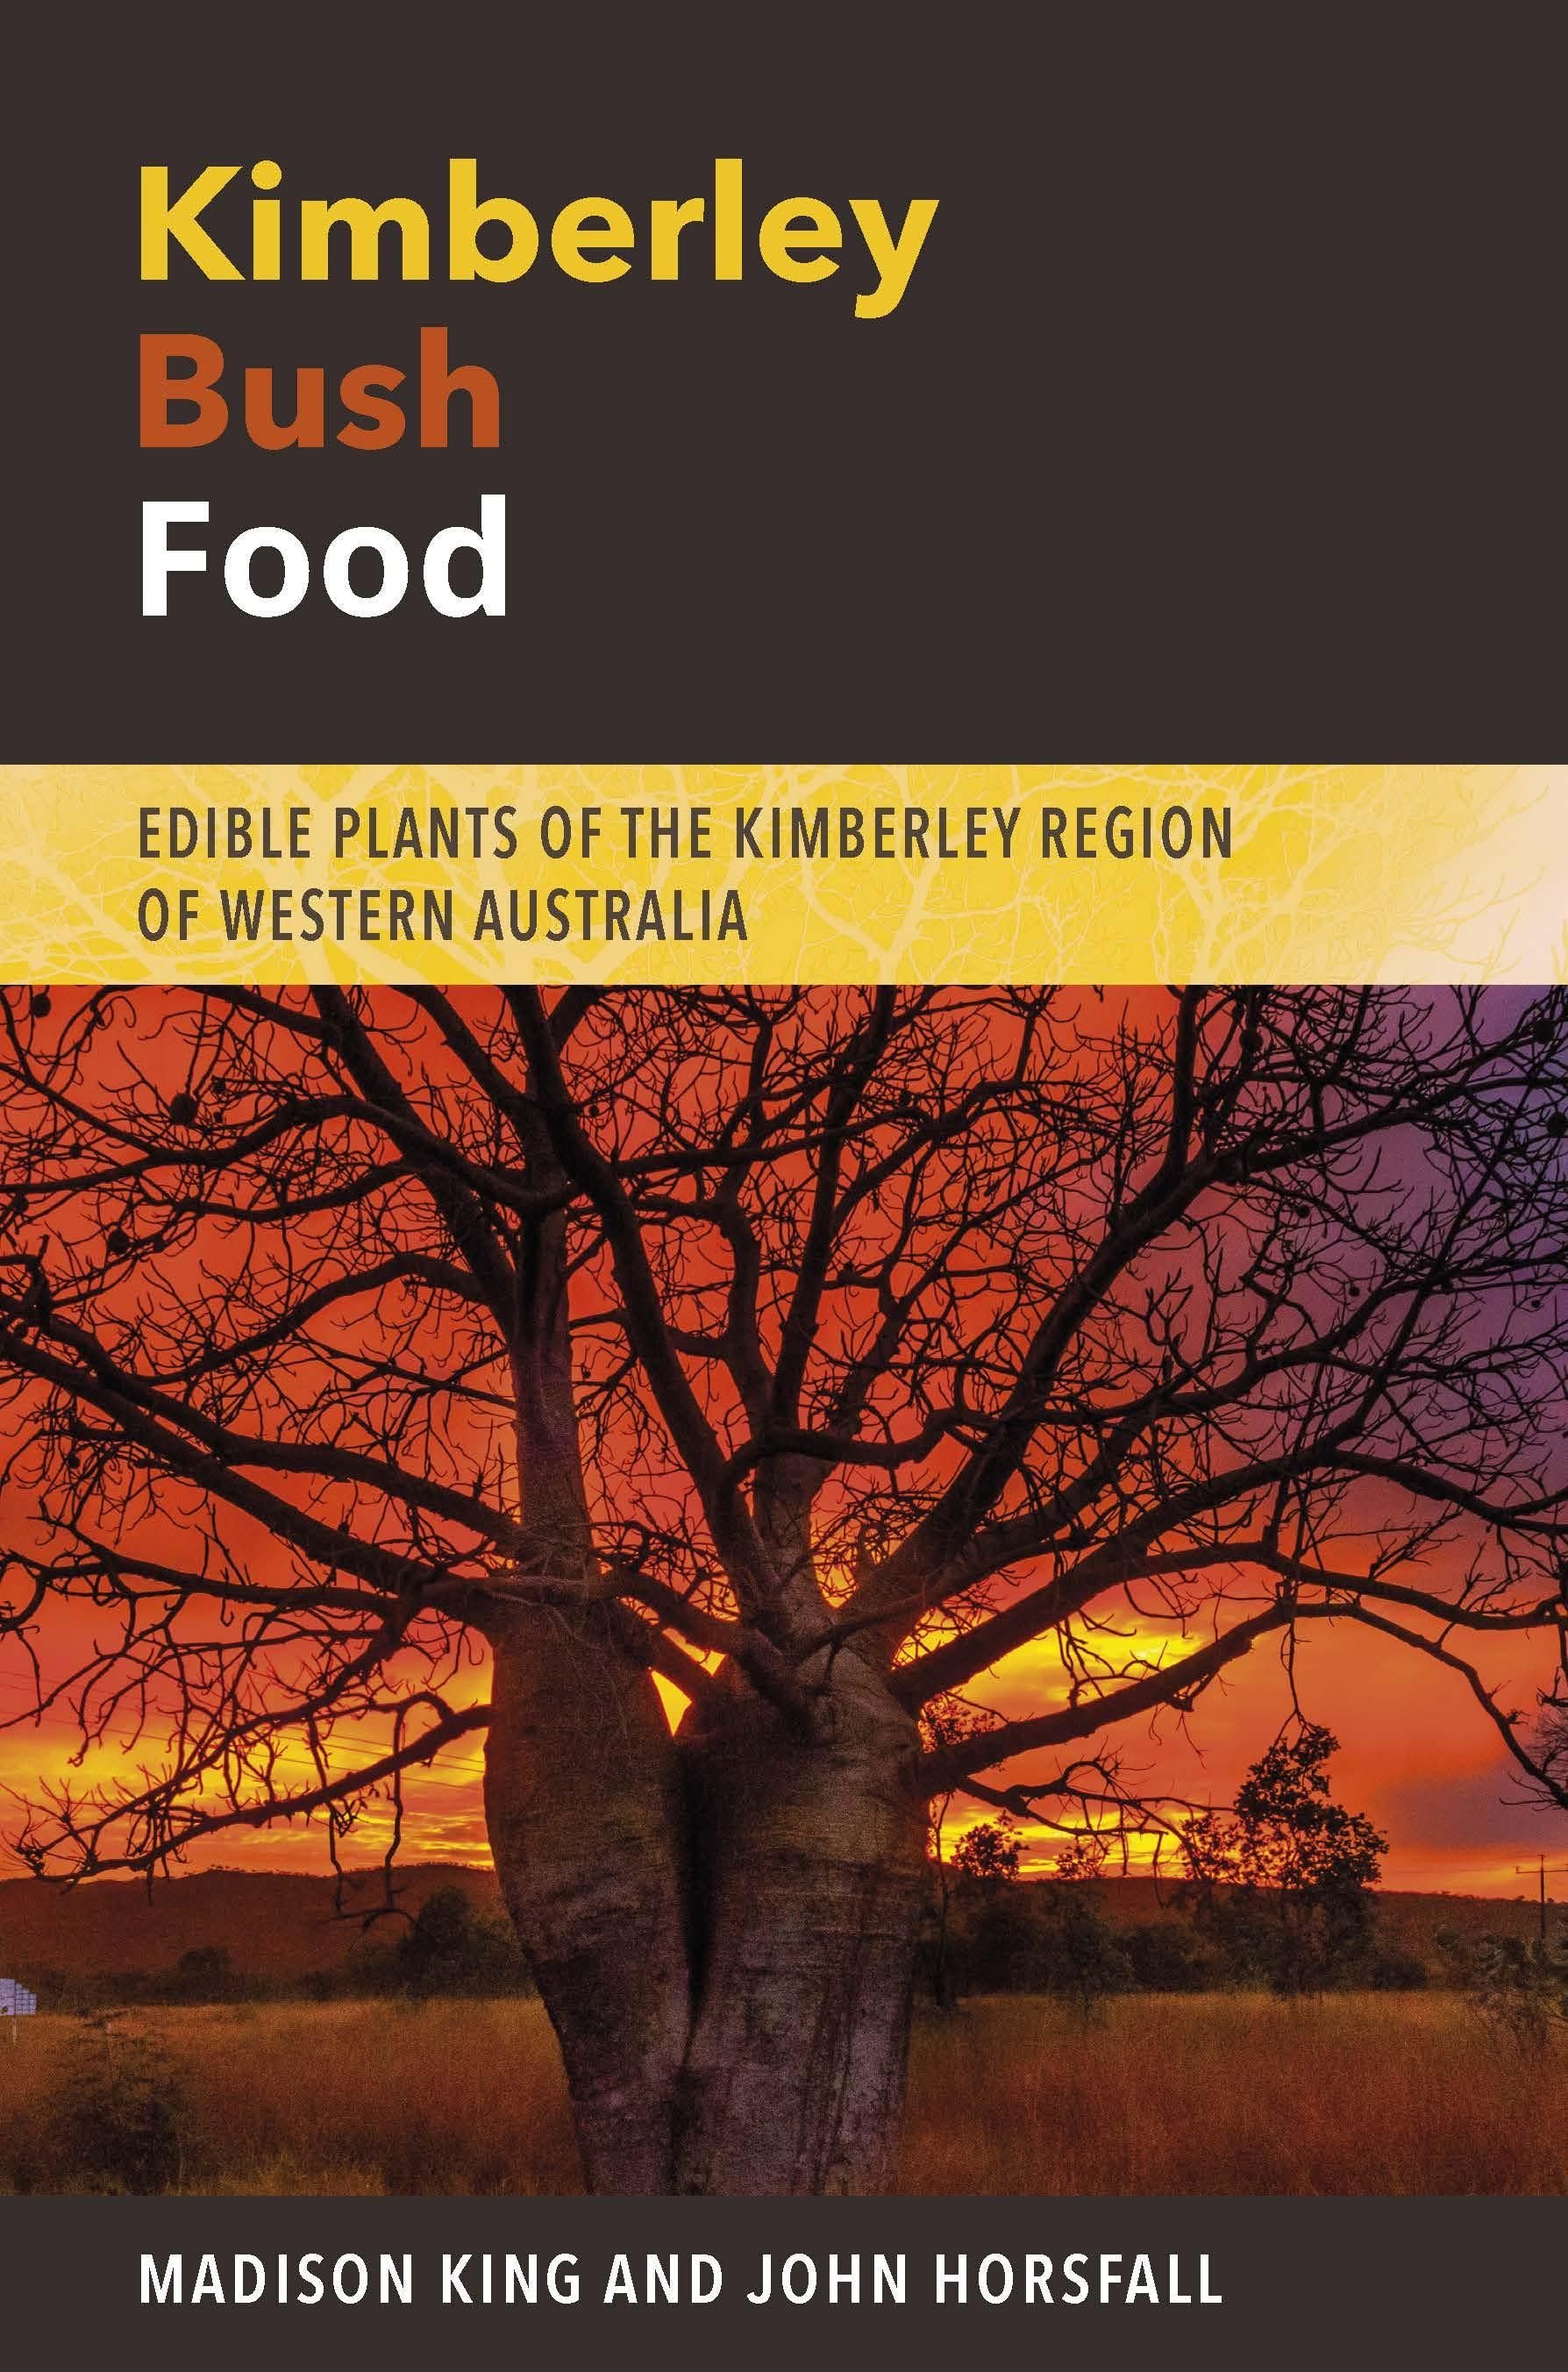 Kimberley Bush Food: Edible Plants of the Kimberley Region of Western Australia